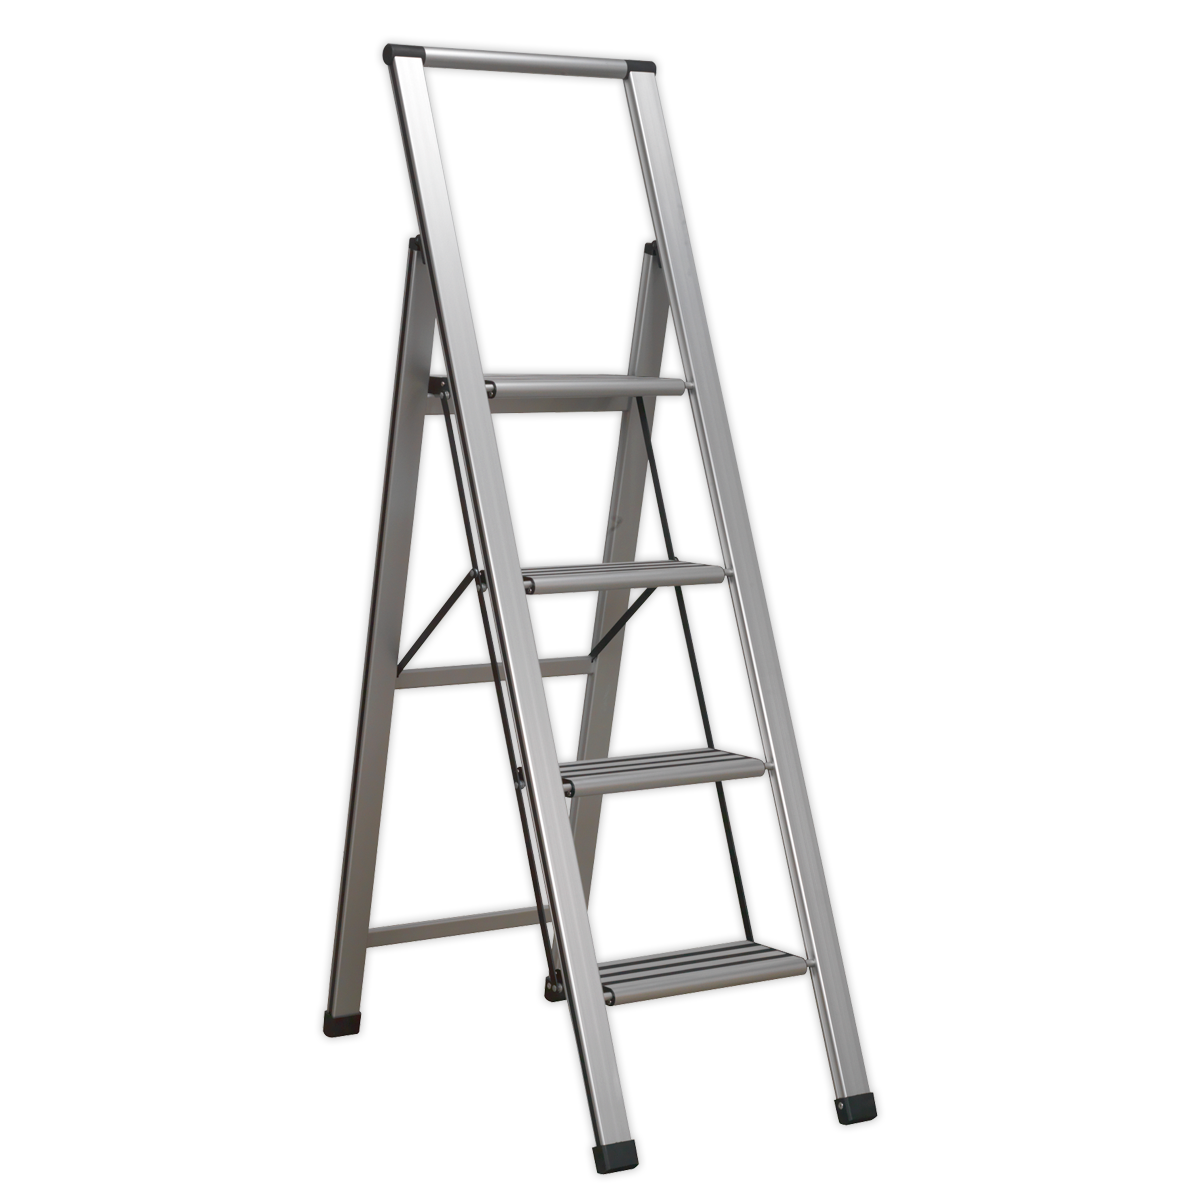 Sealey Aluminium Professional Folding Step Ladder 4-Step 150kg Capacity